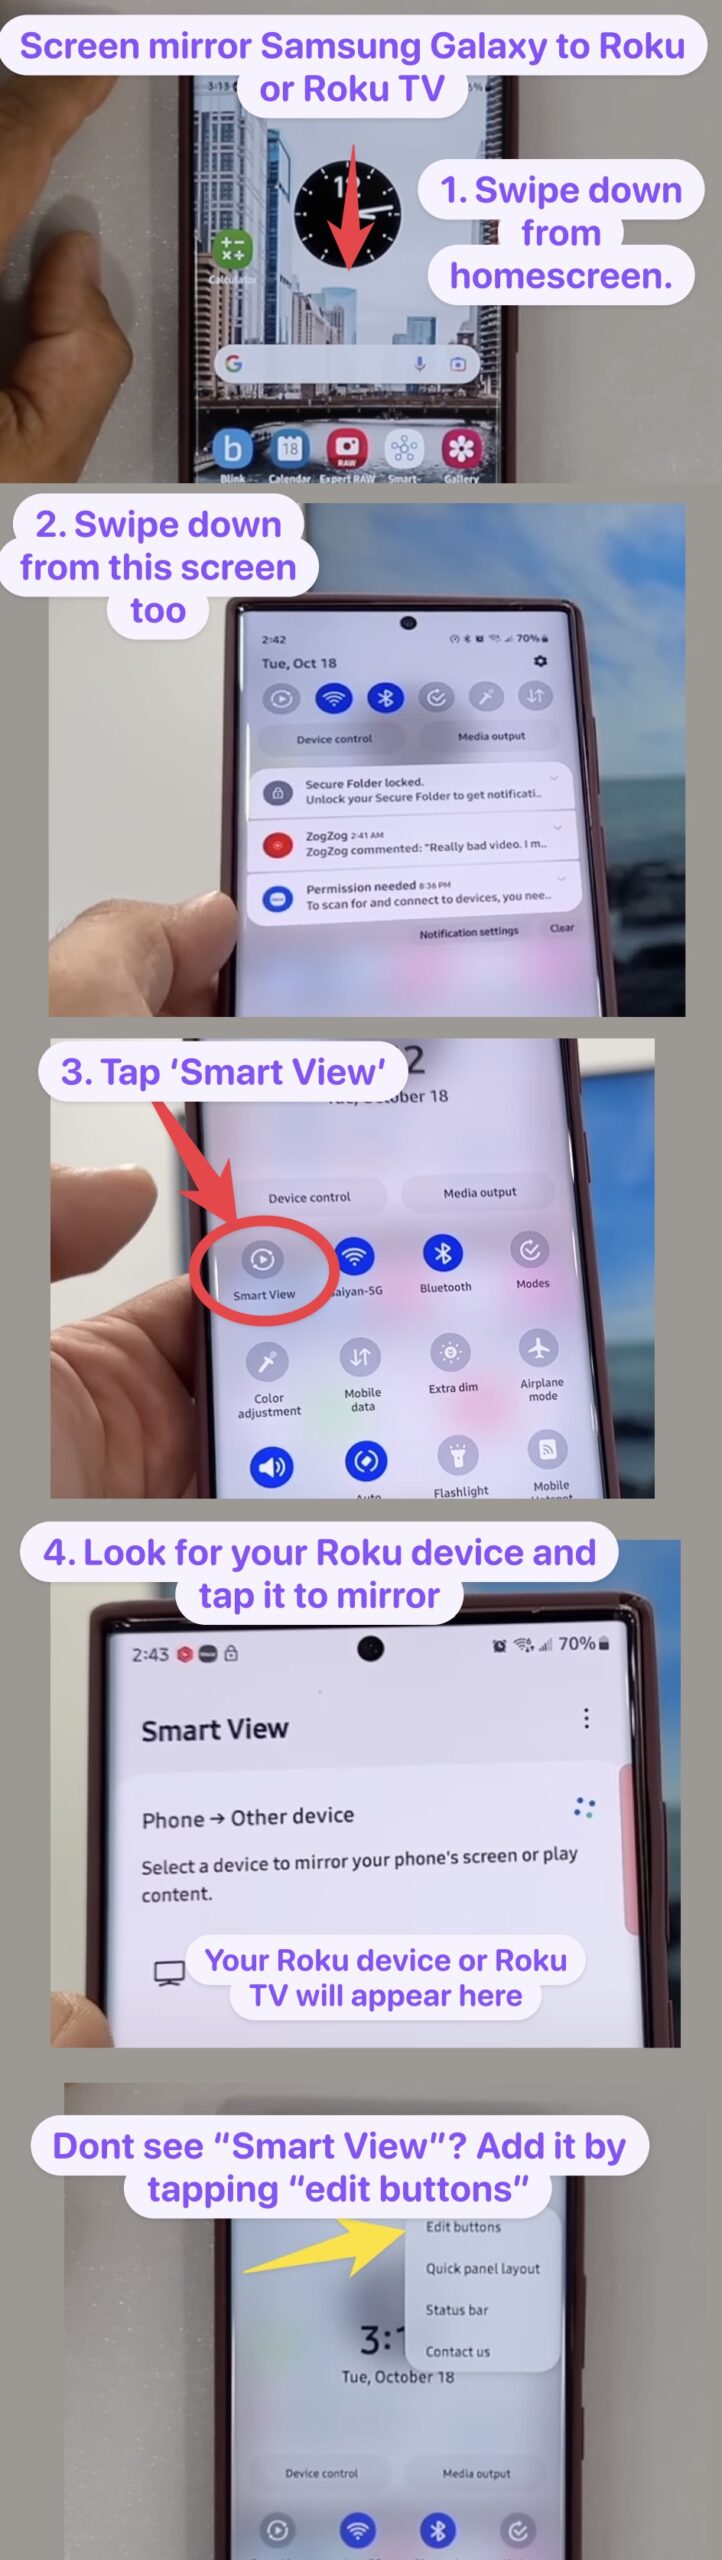 Screen mirror Samsung Galaxy to Roku or Roku TV scaled